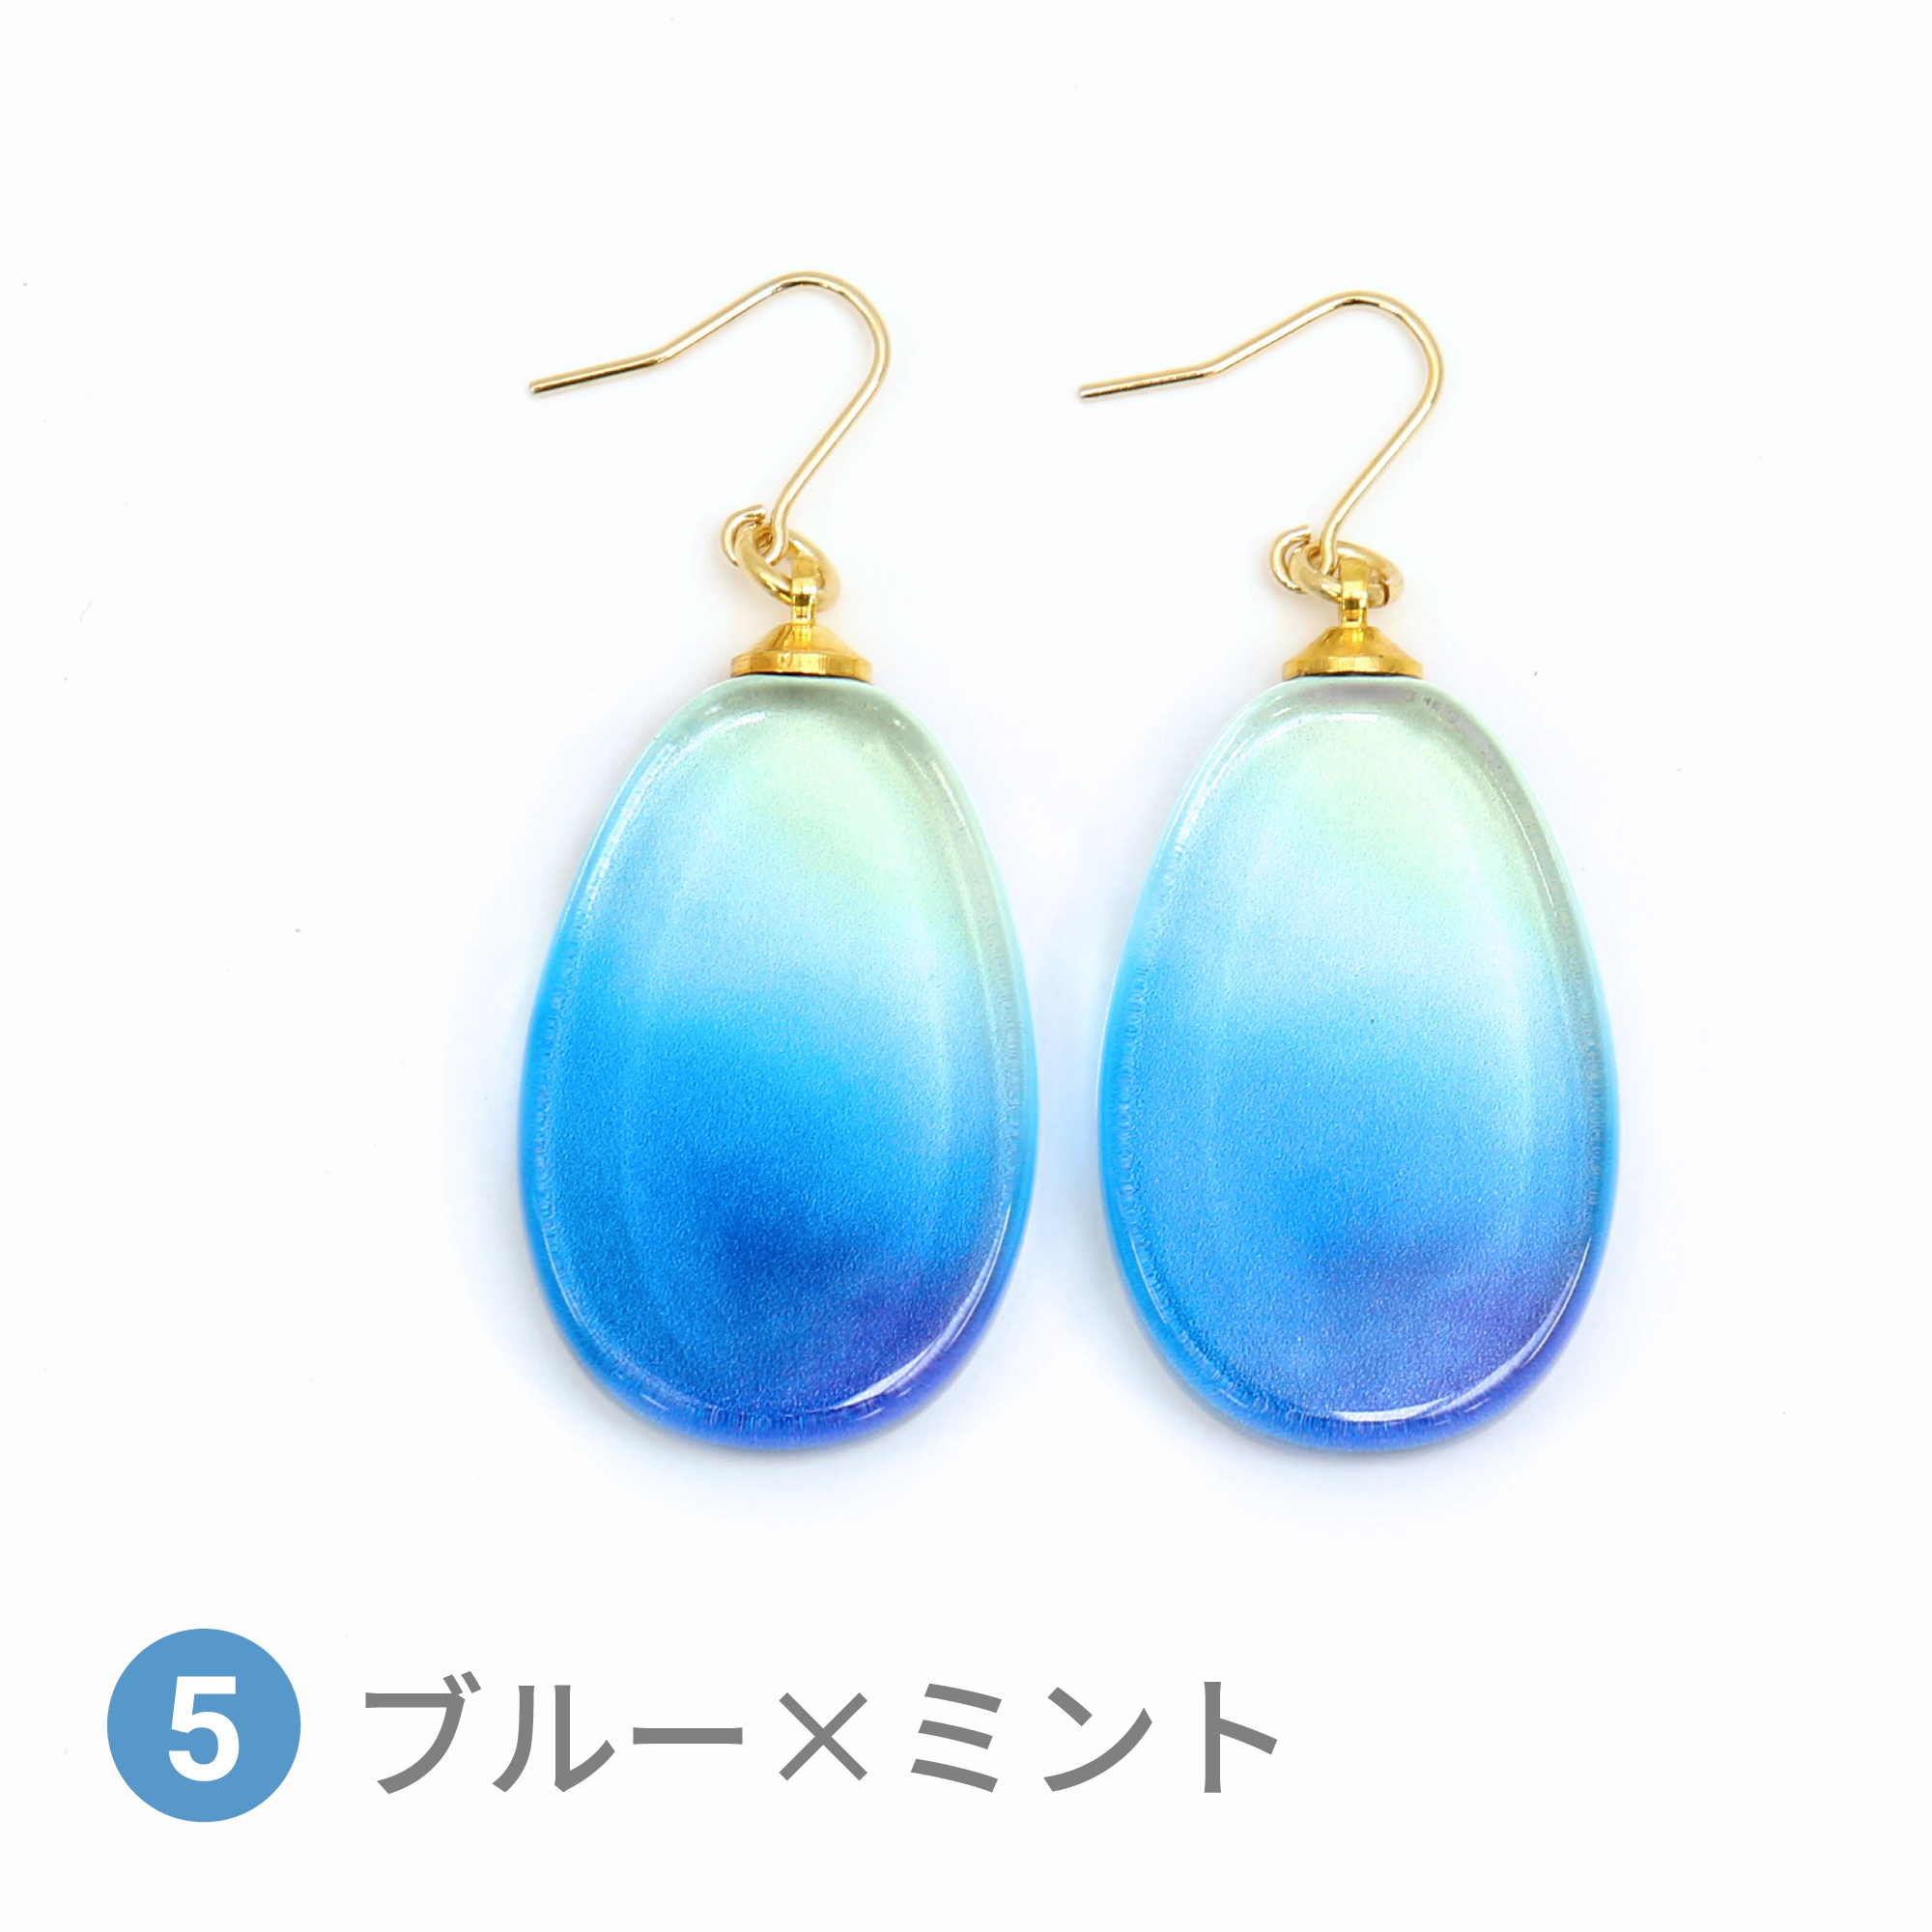 Glass accessories Pierced Earring AURORA blue&mint drop shape